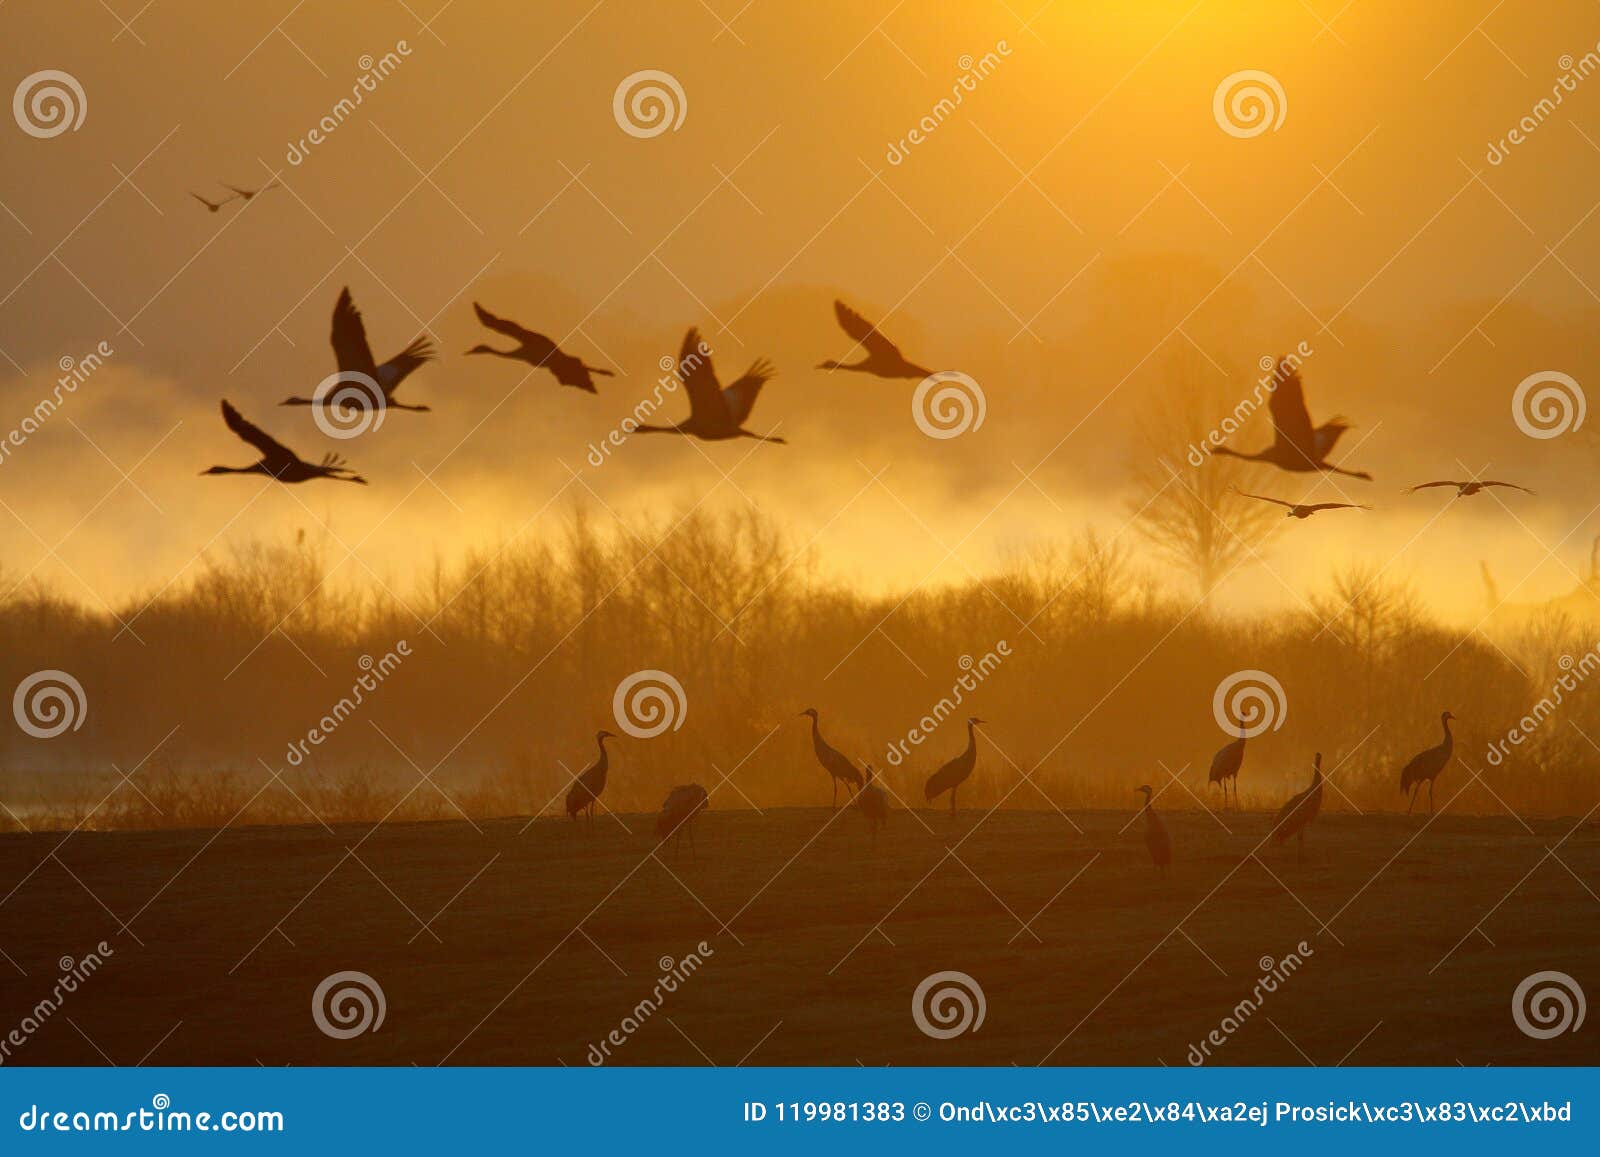 magic sunset with birds. common crane, grus grus, big bird in the nature habitat, lake hornborga, sweden. wildlife scene from euro